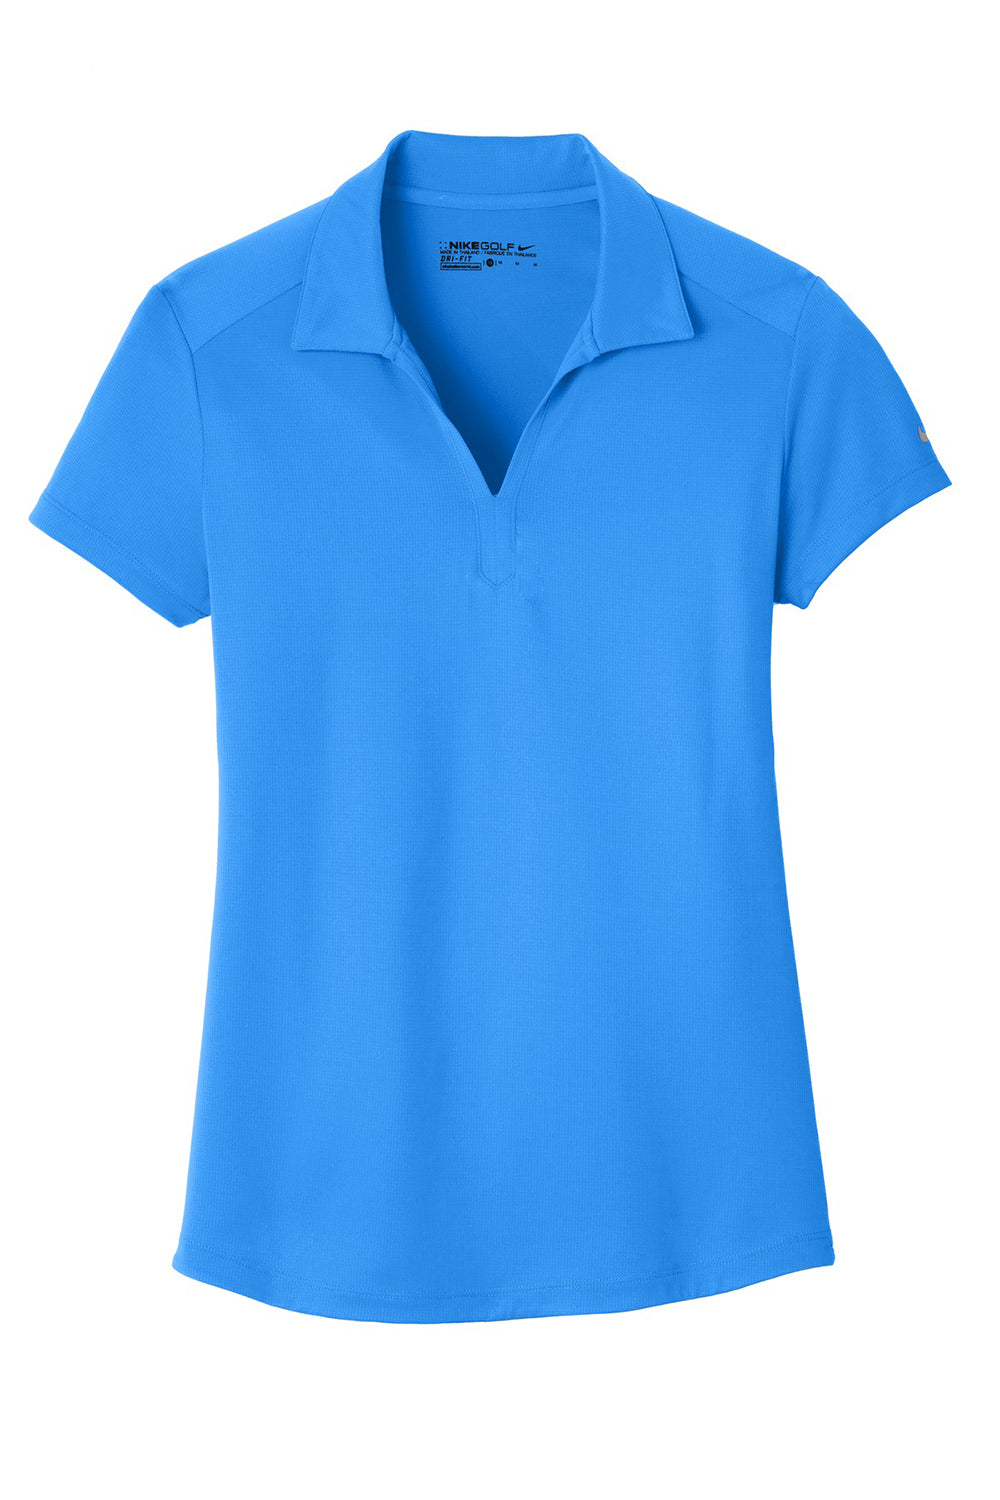 Nike 838957 Womens Legacy Dri-Fit Moisture Wicking Short Sleeve Polo Shirt Photo Blue Flat Front